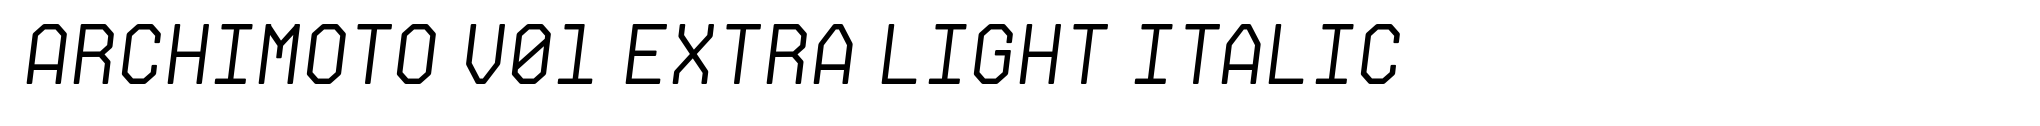 Archimoto V01 Extra Light Italic image